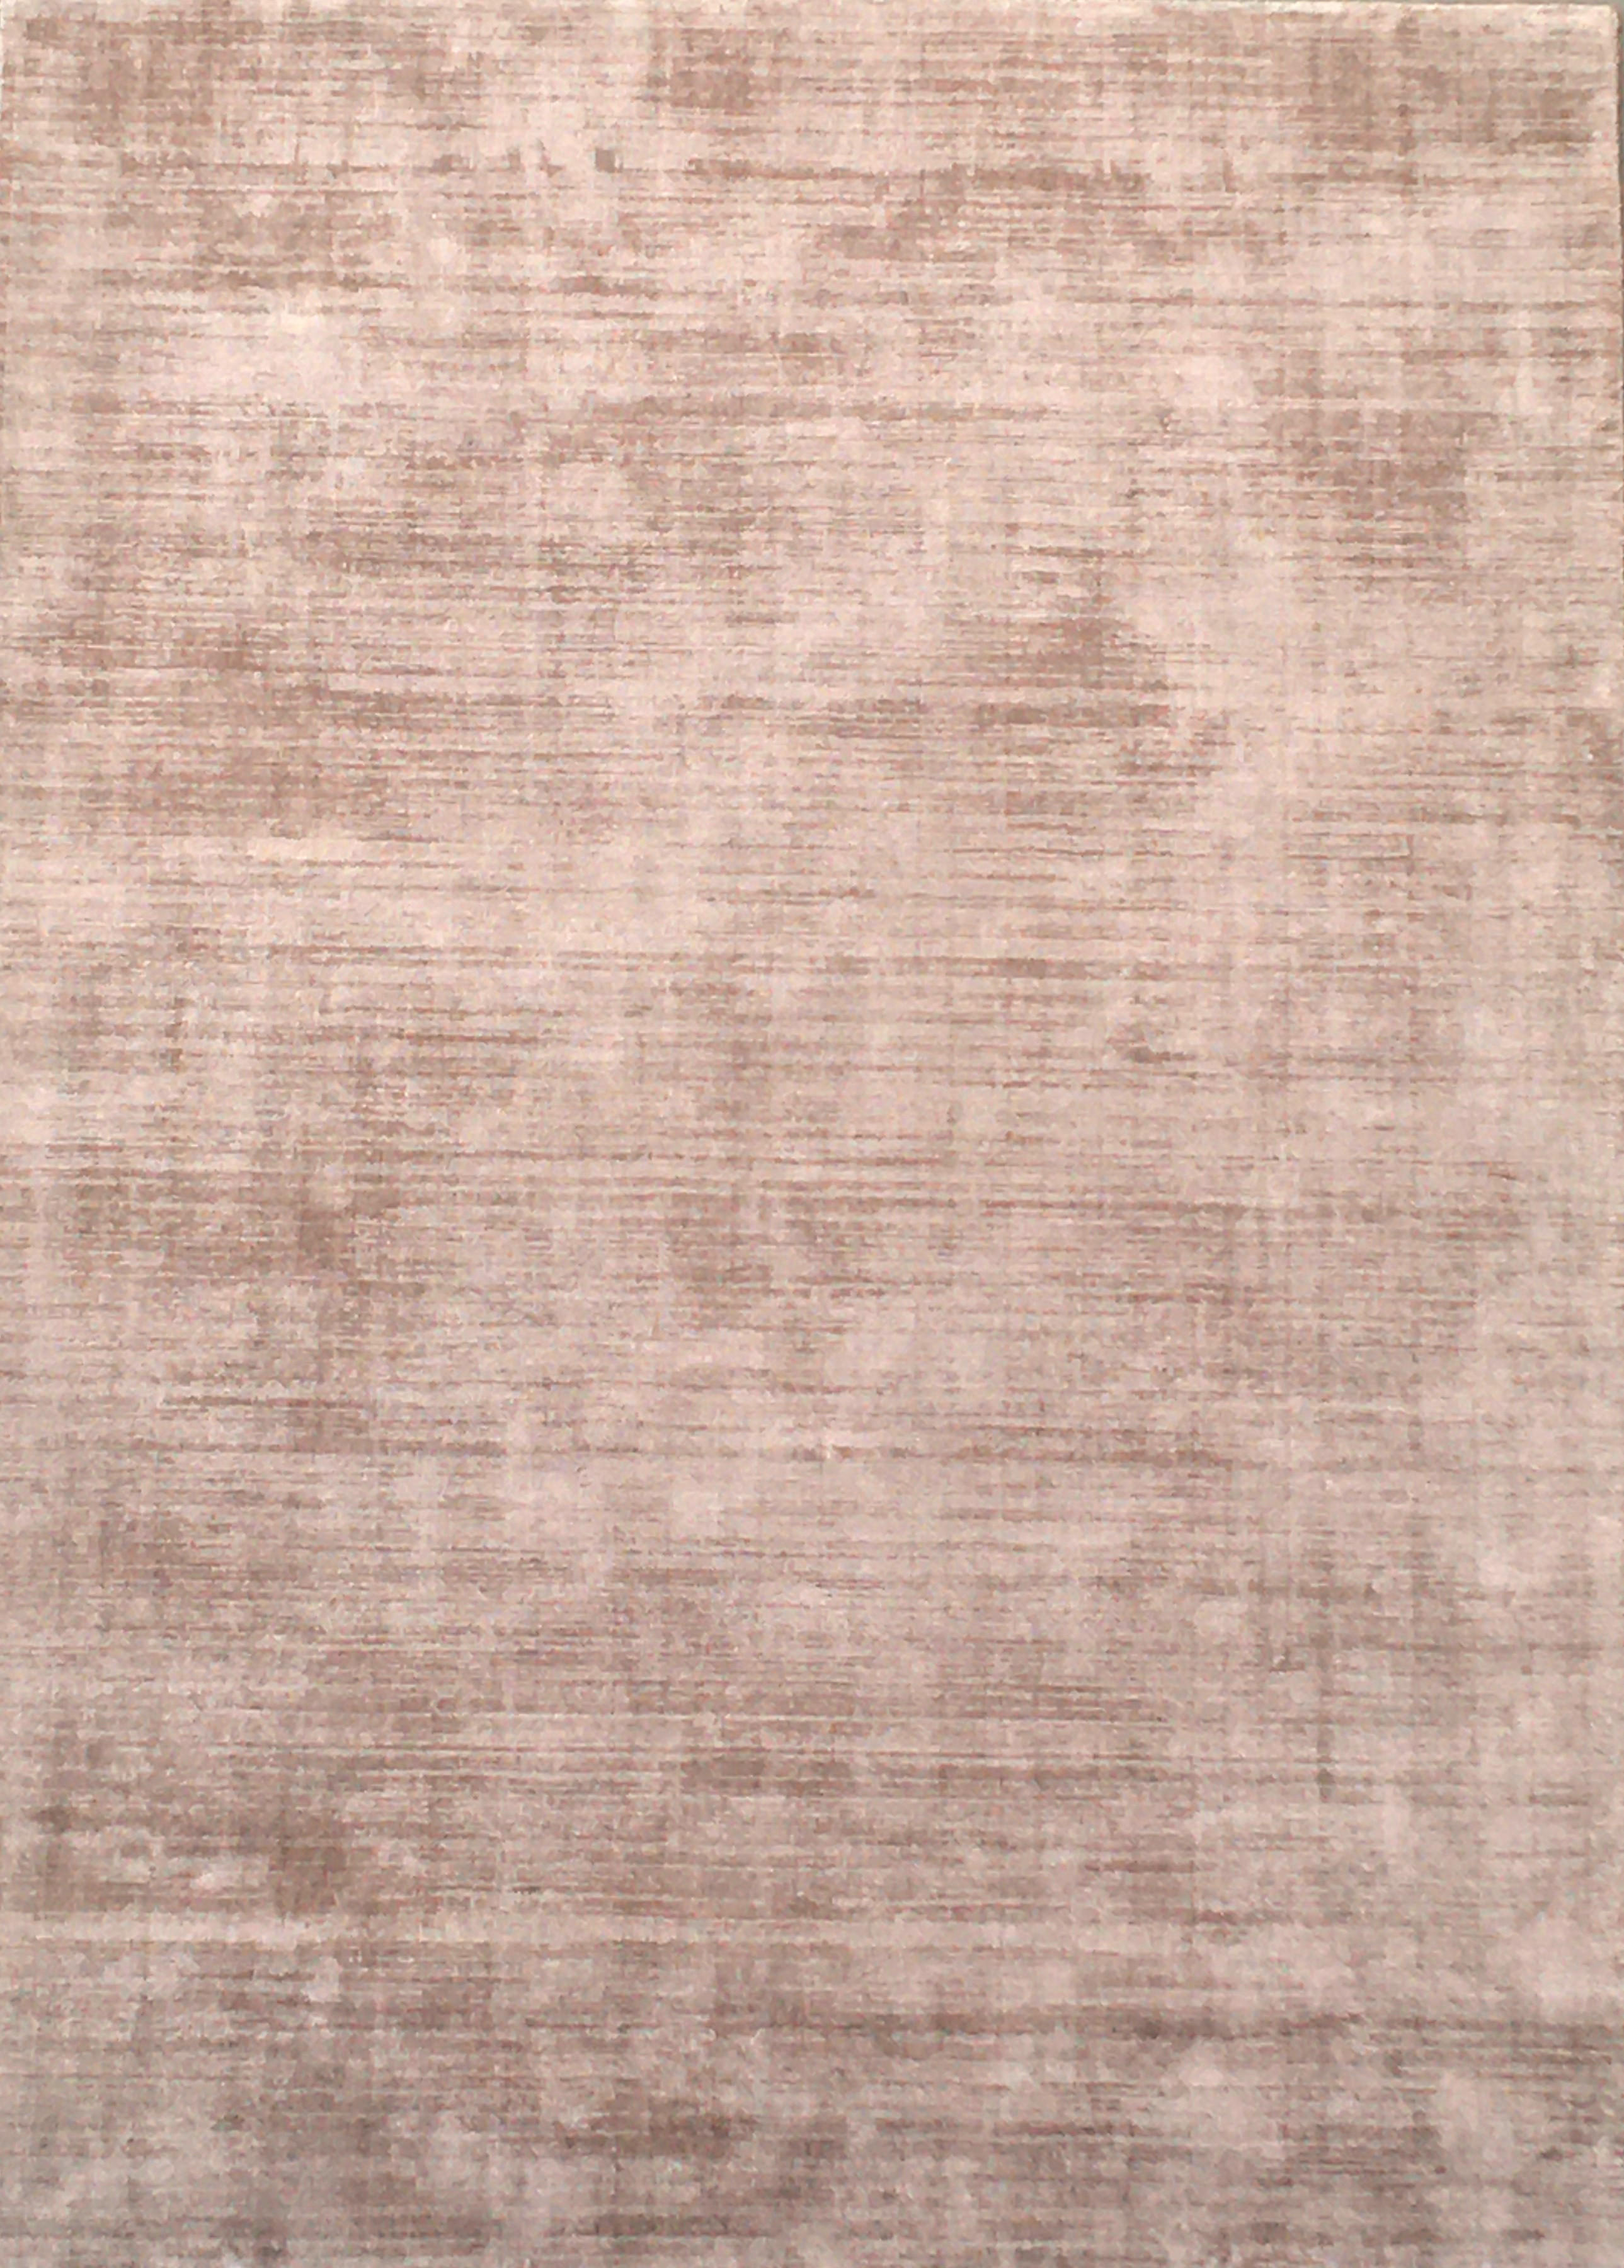 ORIENTTEPPICH 70/130 cm  - Silberfarben, Basics, Naturmaterialien/Textil (70/130cm) - Cazaris